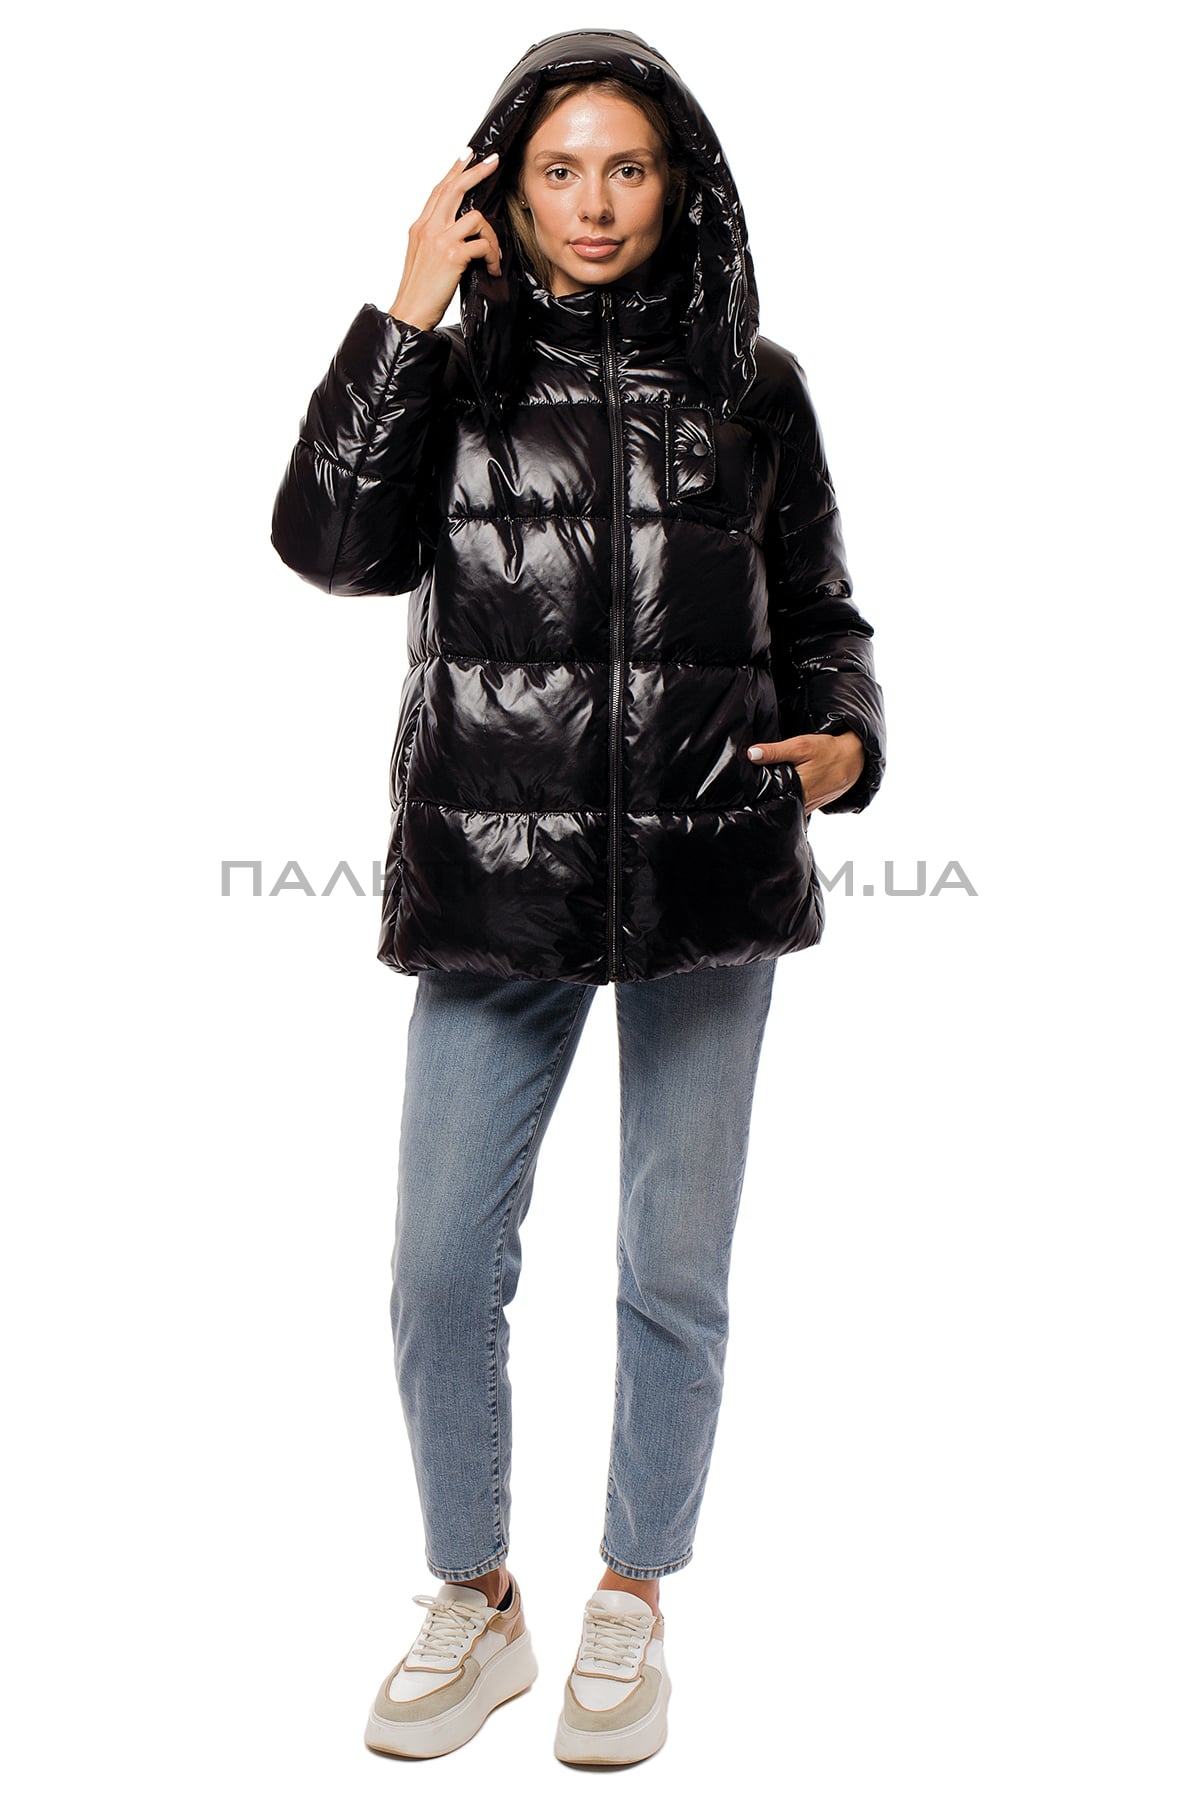  Жіноча куртка з утеплювачем Tinsul-M чорна